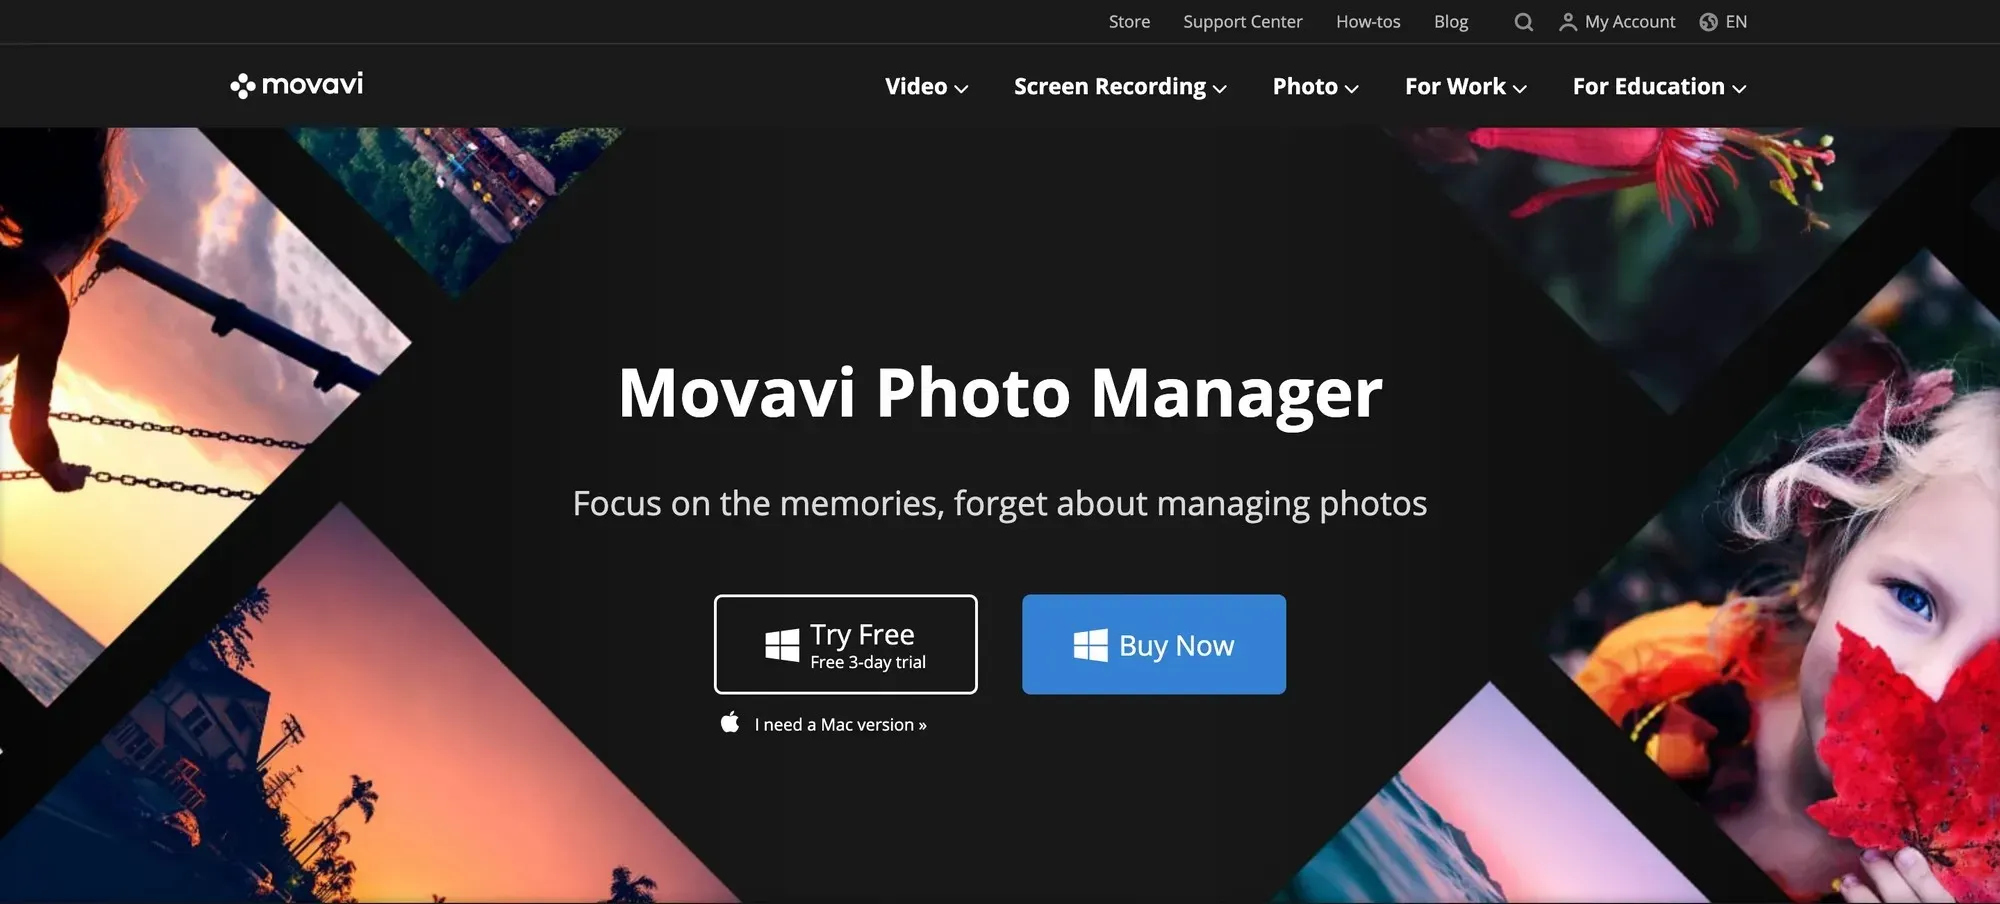 Movavi Photo Manager interface